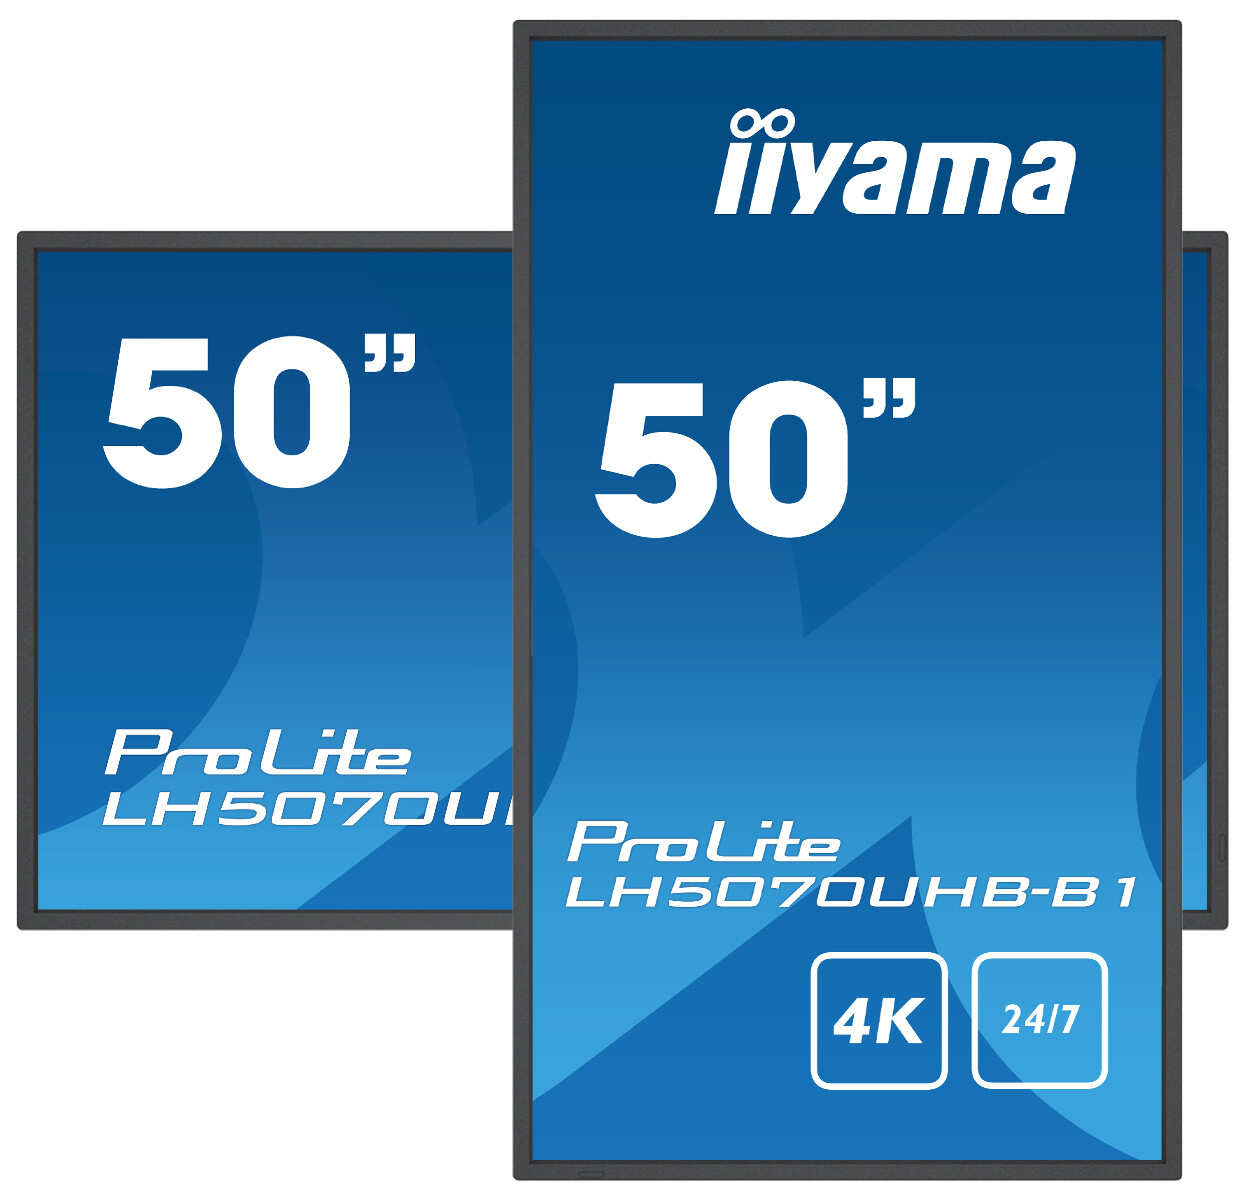 Iiyama-PROLITE-LH5070UHB-B1